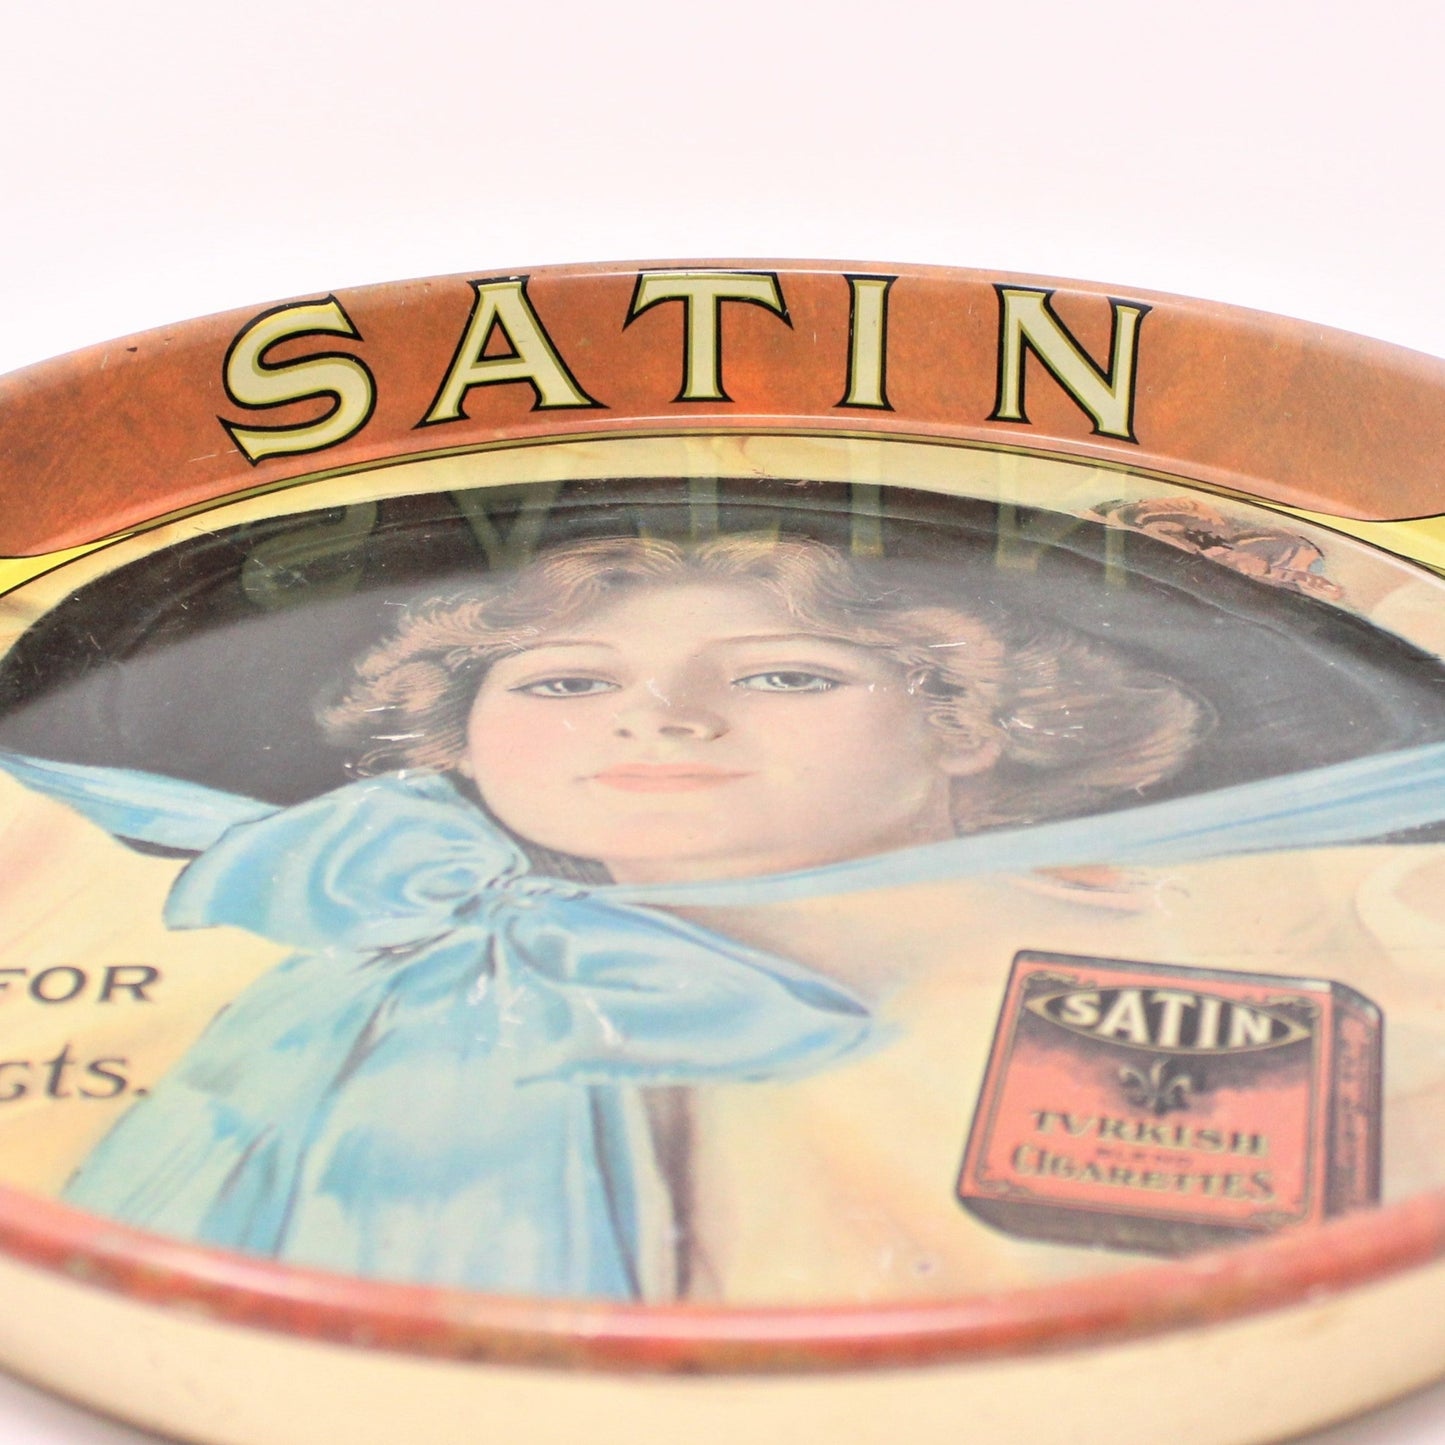 Tray, Satin Turkish Cigarettes, Tin/Metal Vintage Advertisement, 14"